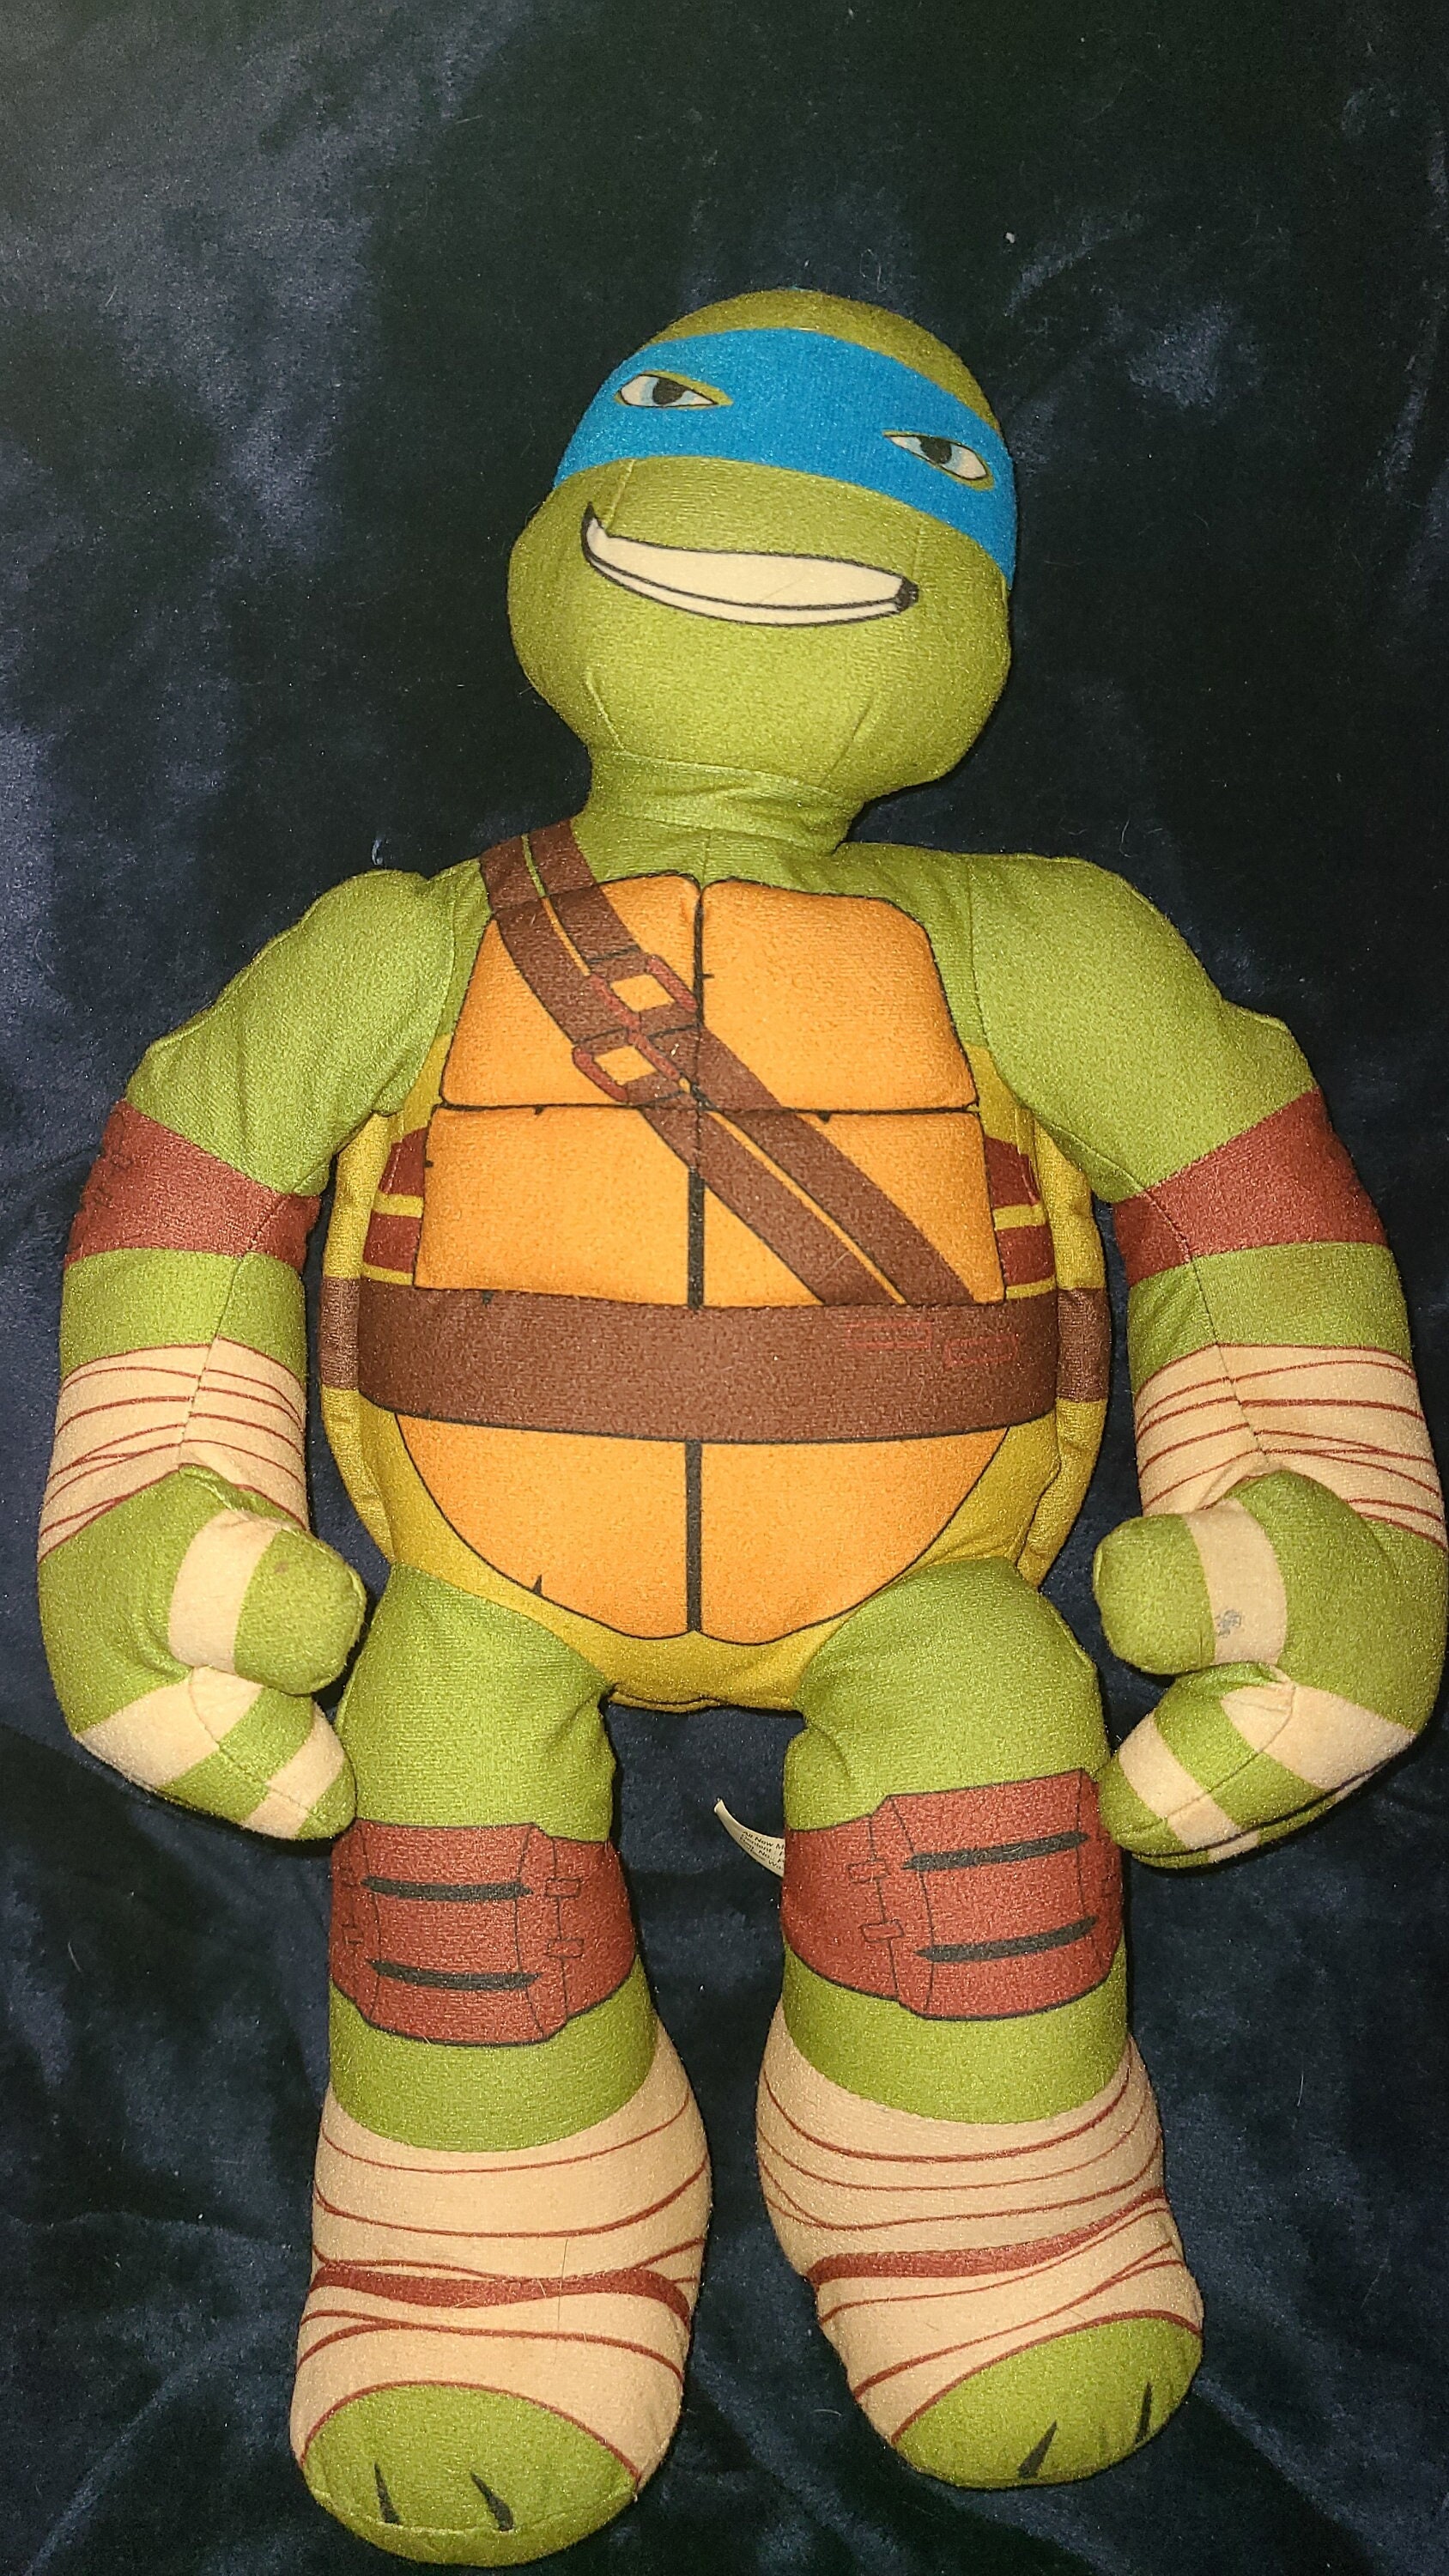 Teenage Mutants Ninja Turtles Plush Tmnts Leonardo Plushie Collectible  Squishy Turtle Peluche Pour les fans